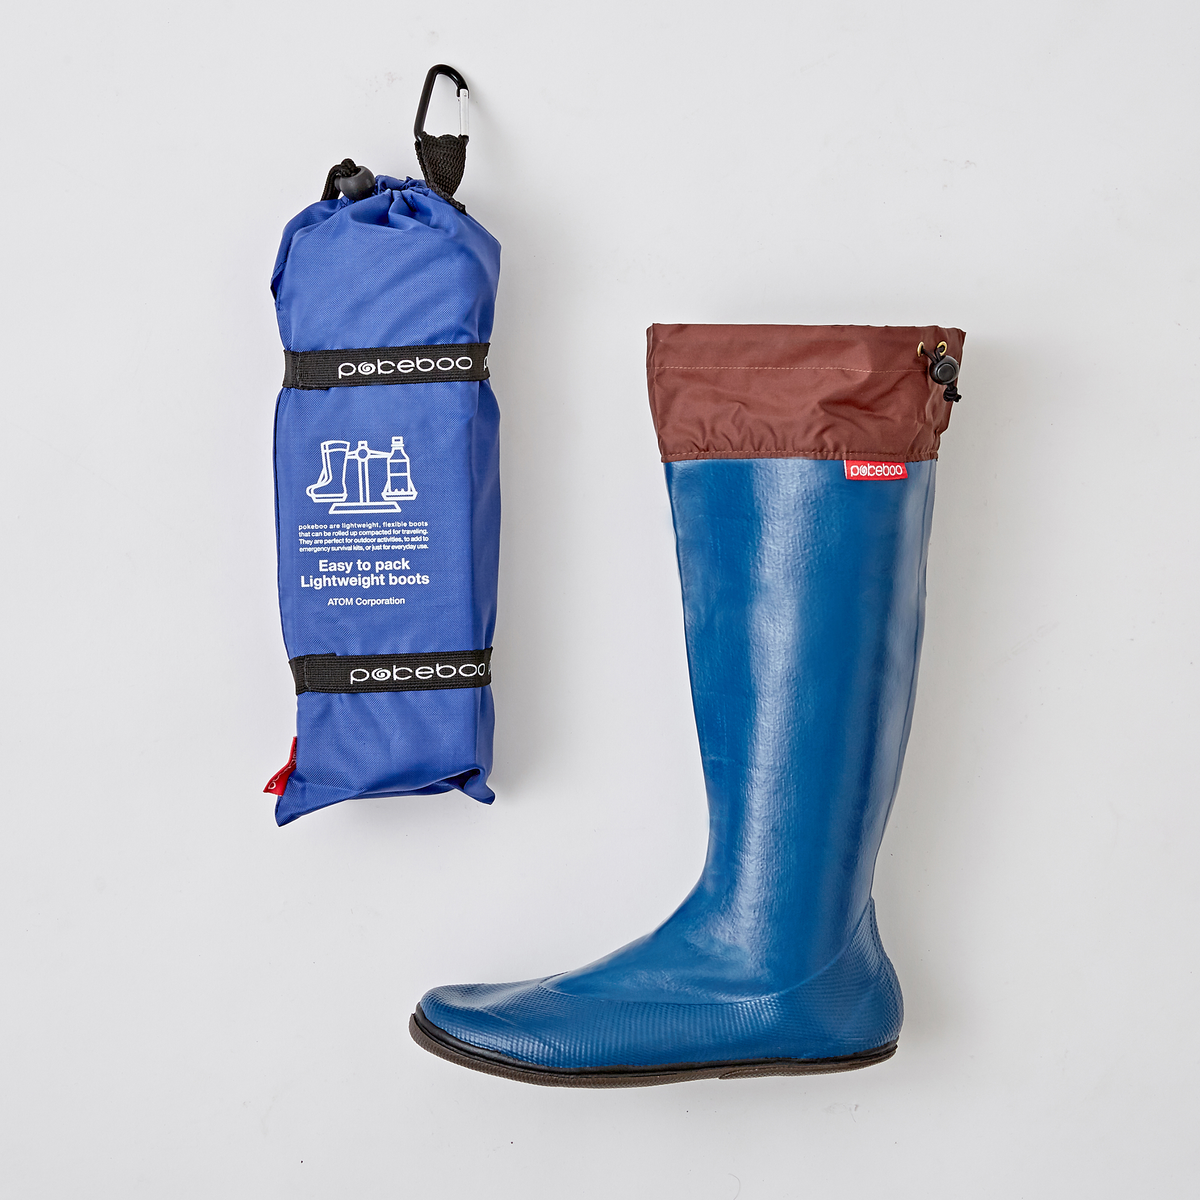 Pokeboo, Packable Rubber Rain Boots Royal Blue, Size, SS, Rainboots,